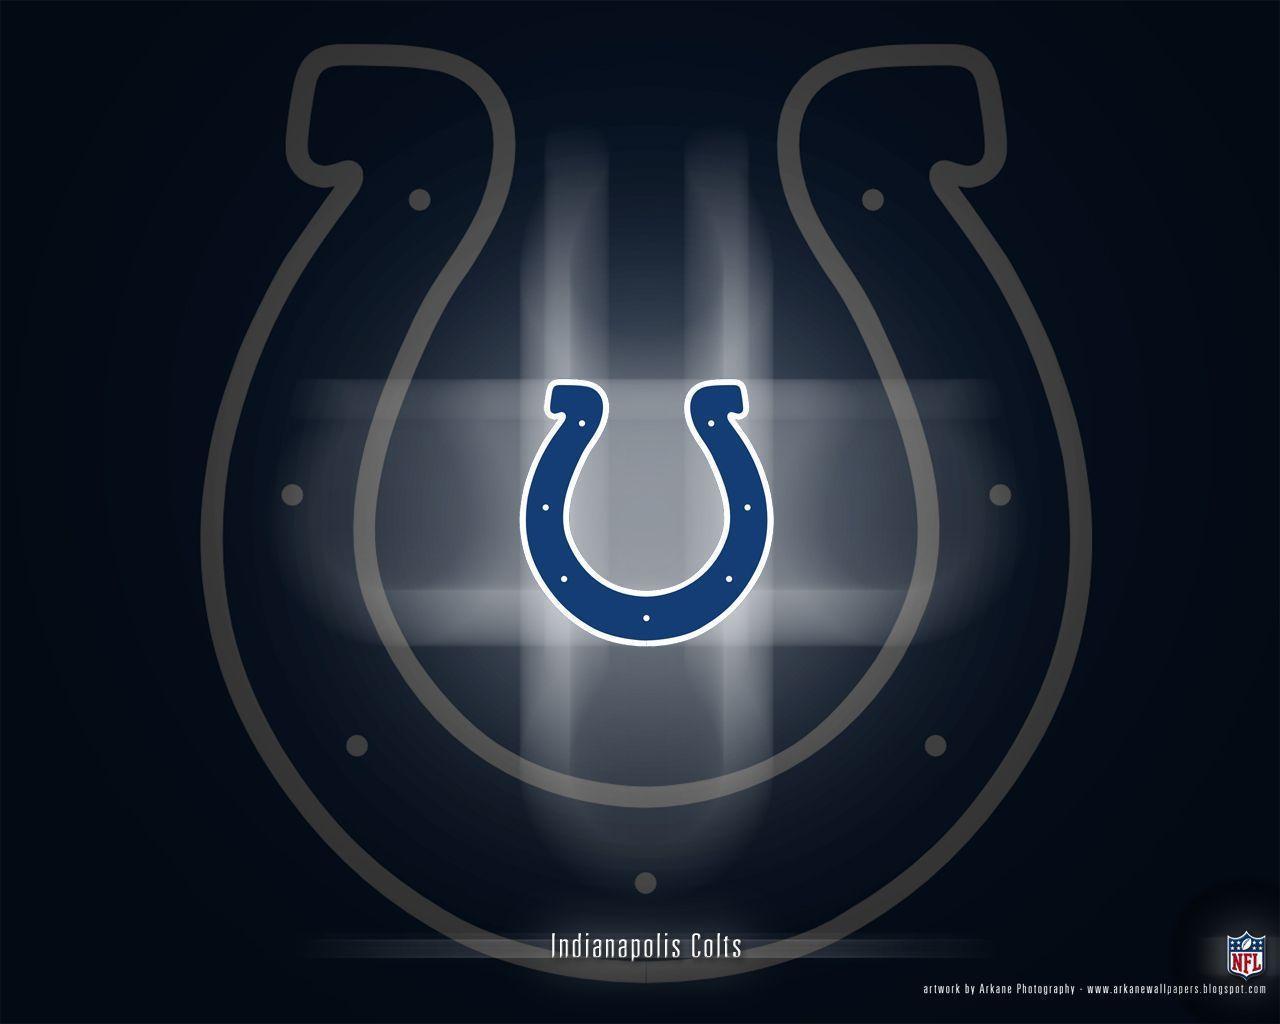 Indianapolis Colts wallpaper desktop wallpaper. Indianapolis